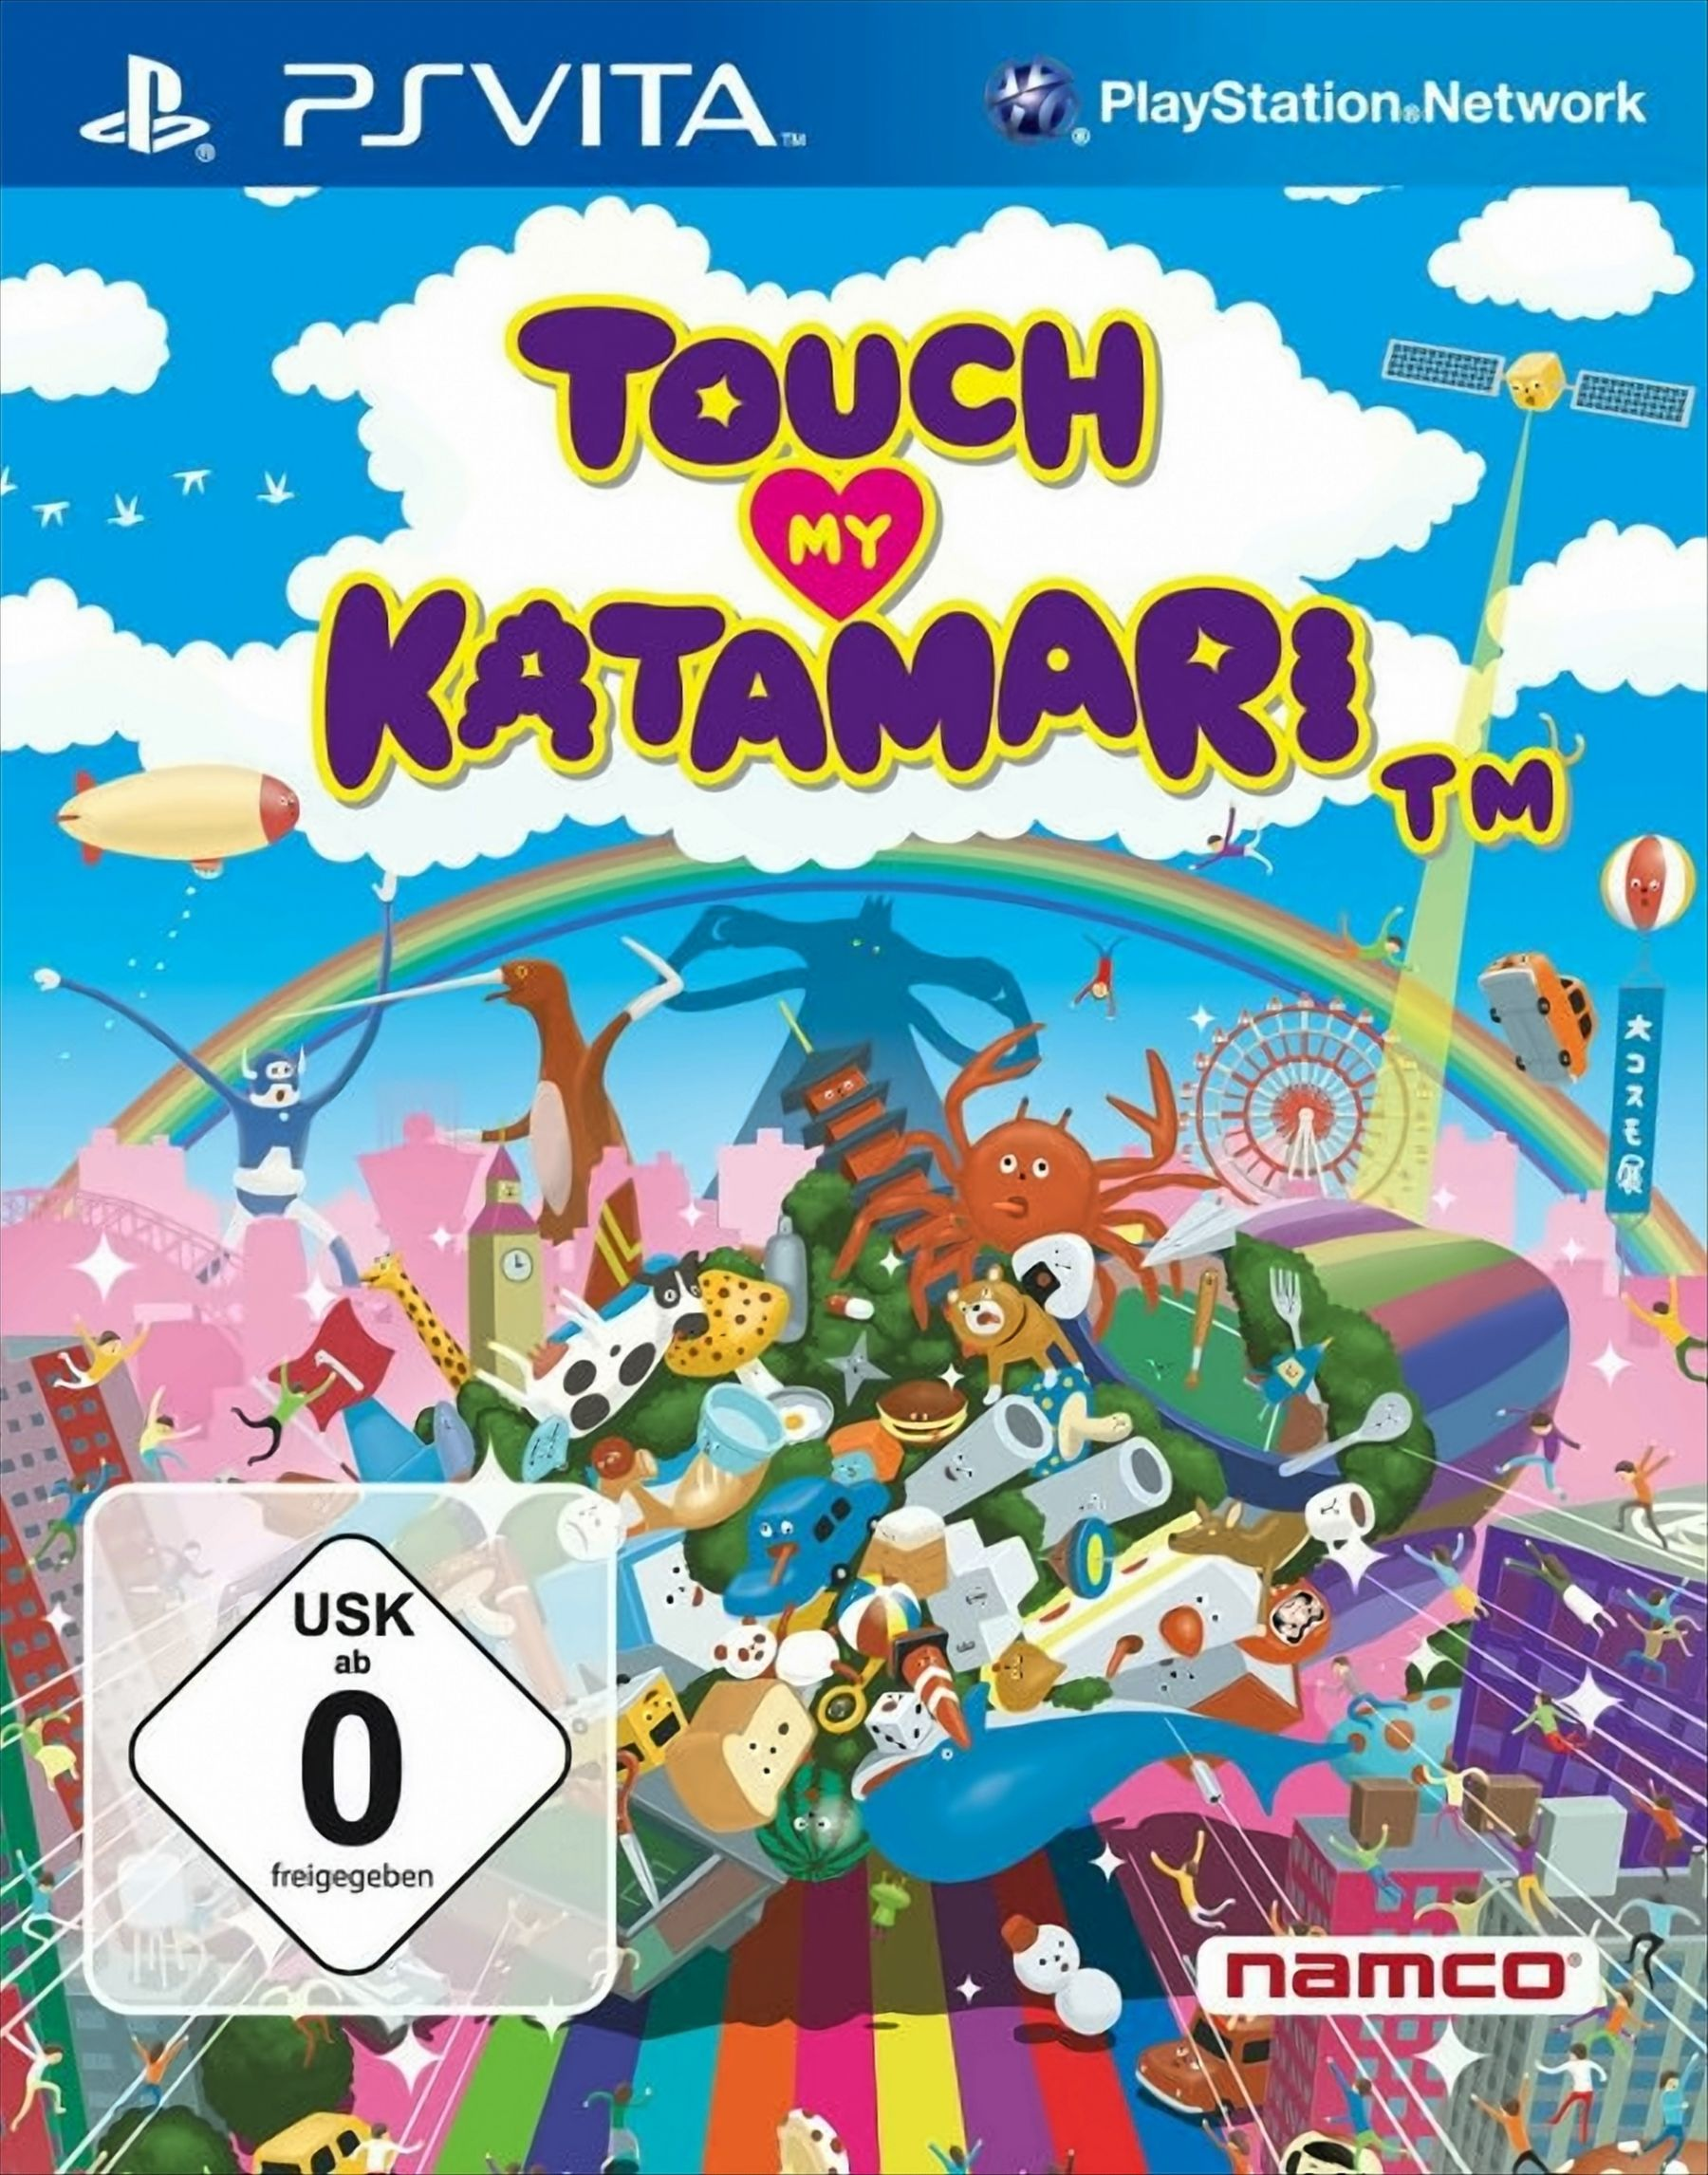 My Vita] [PlayStation - Katamari Touch